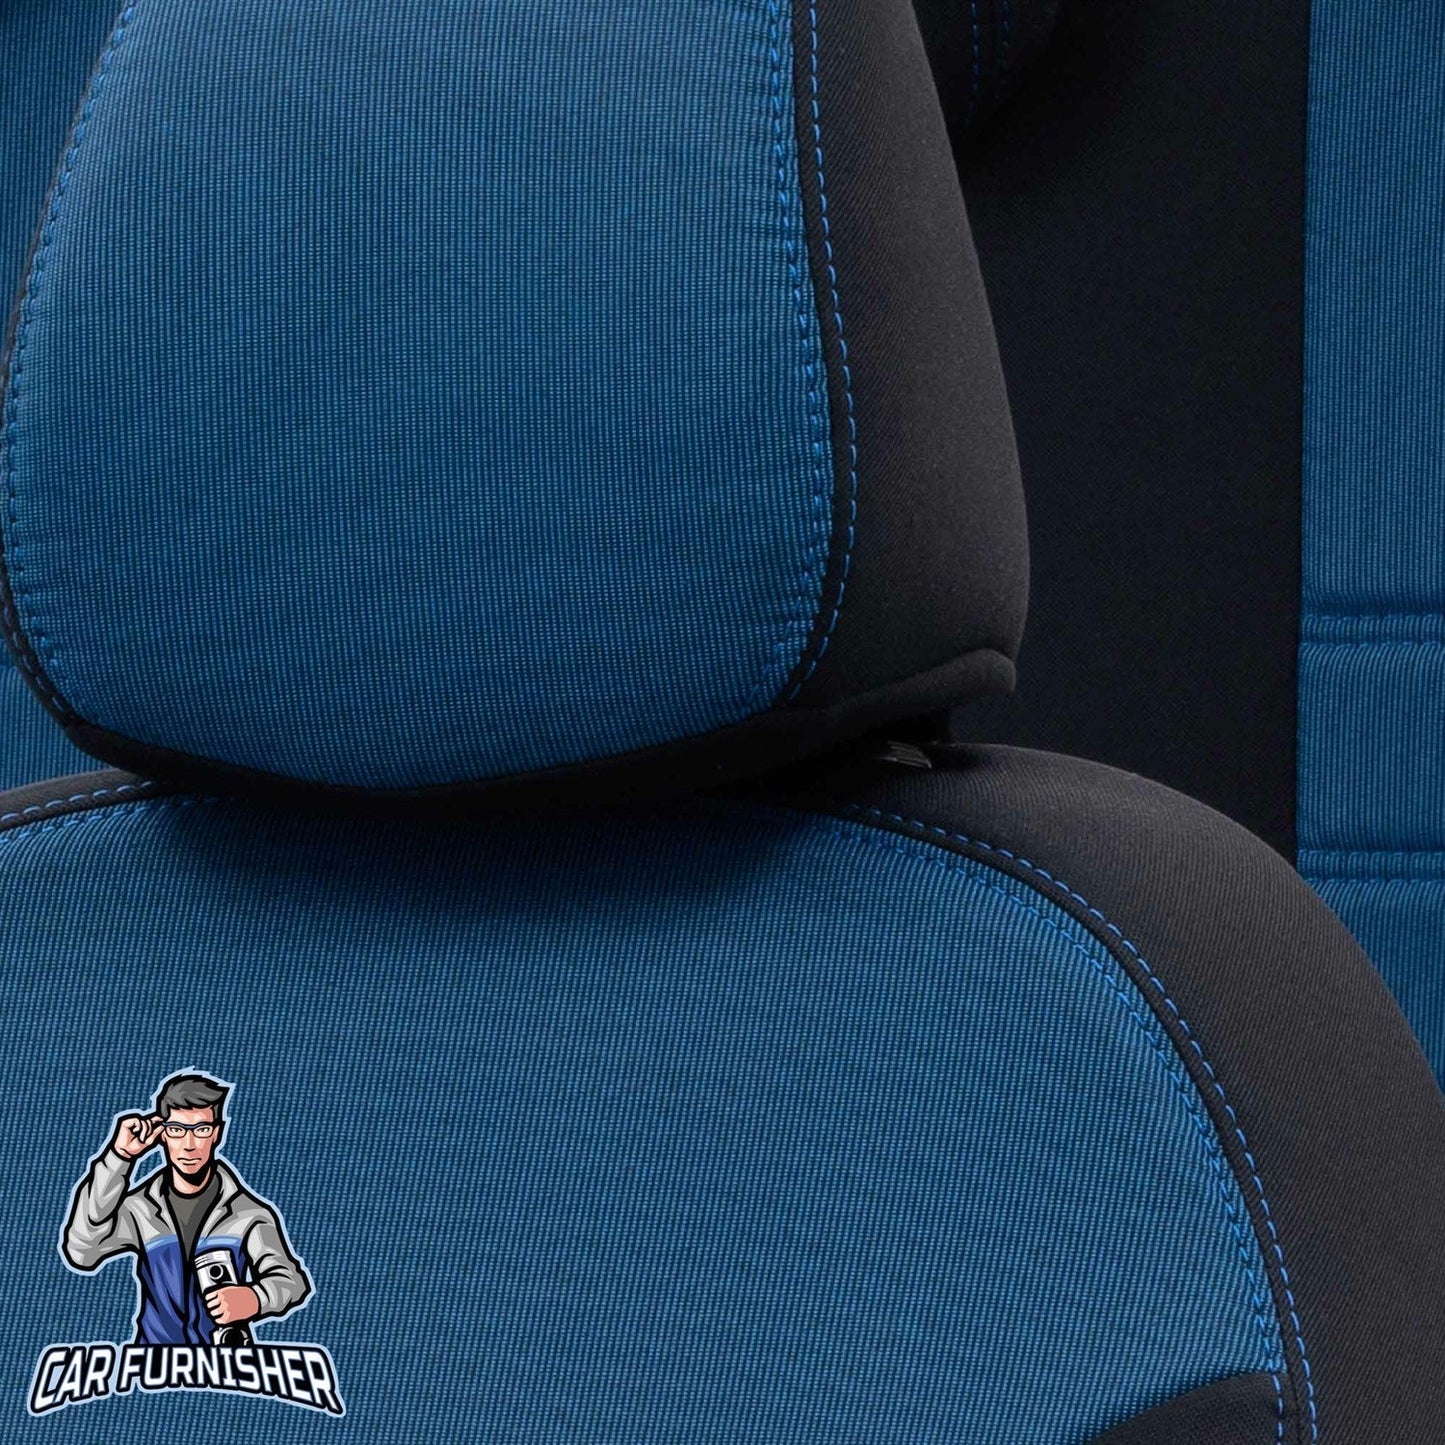 Audi A4 Seat Cover Original Jacquard Design Blue Jacquard Fabric